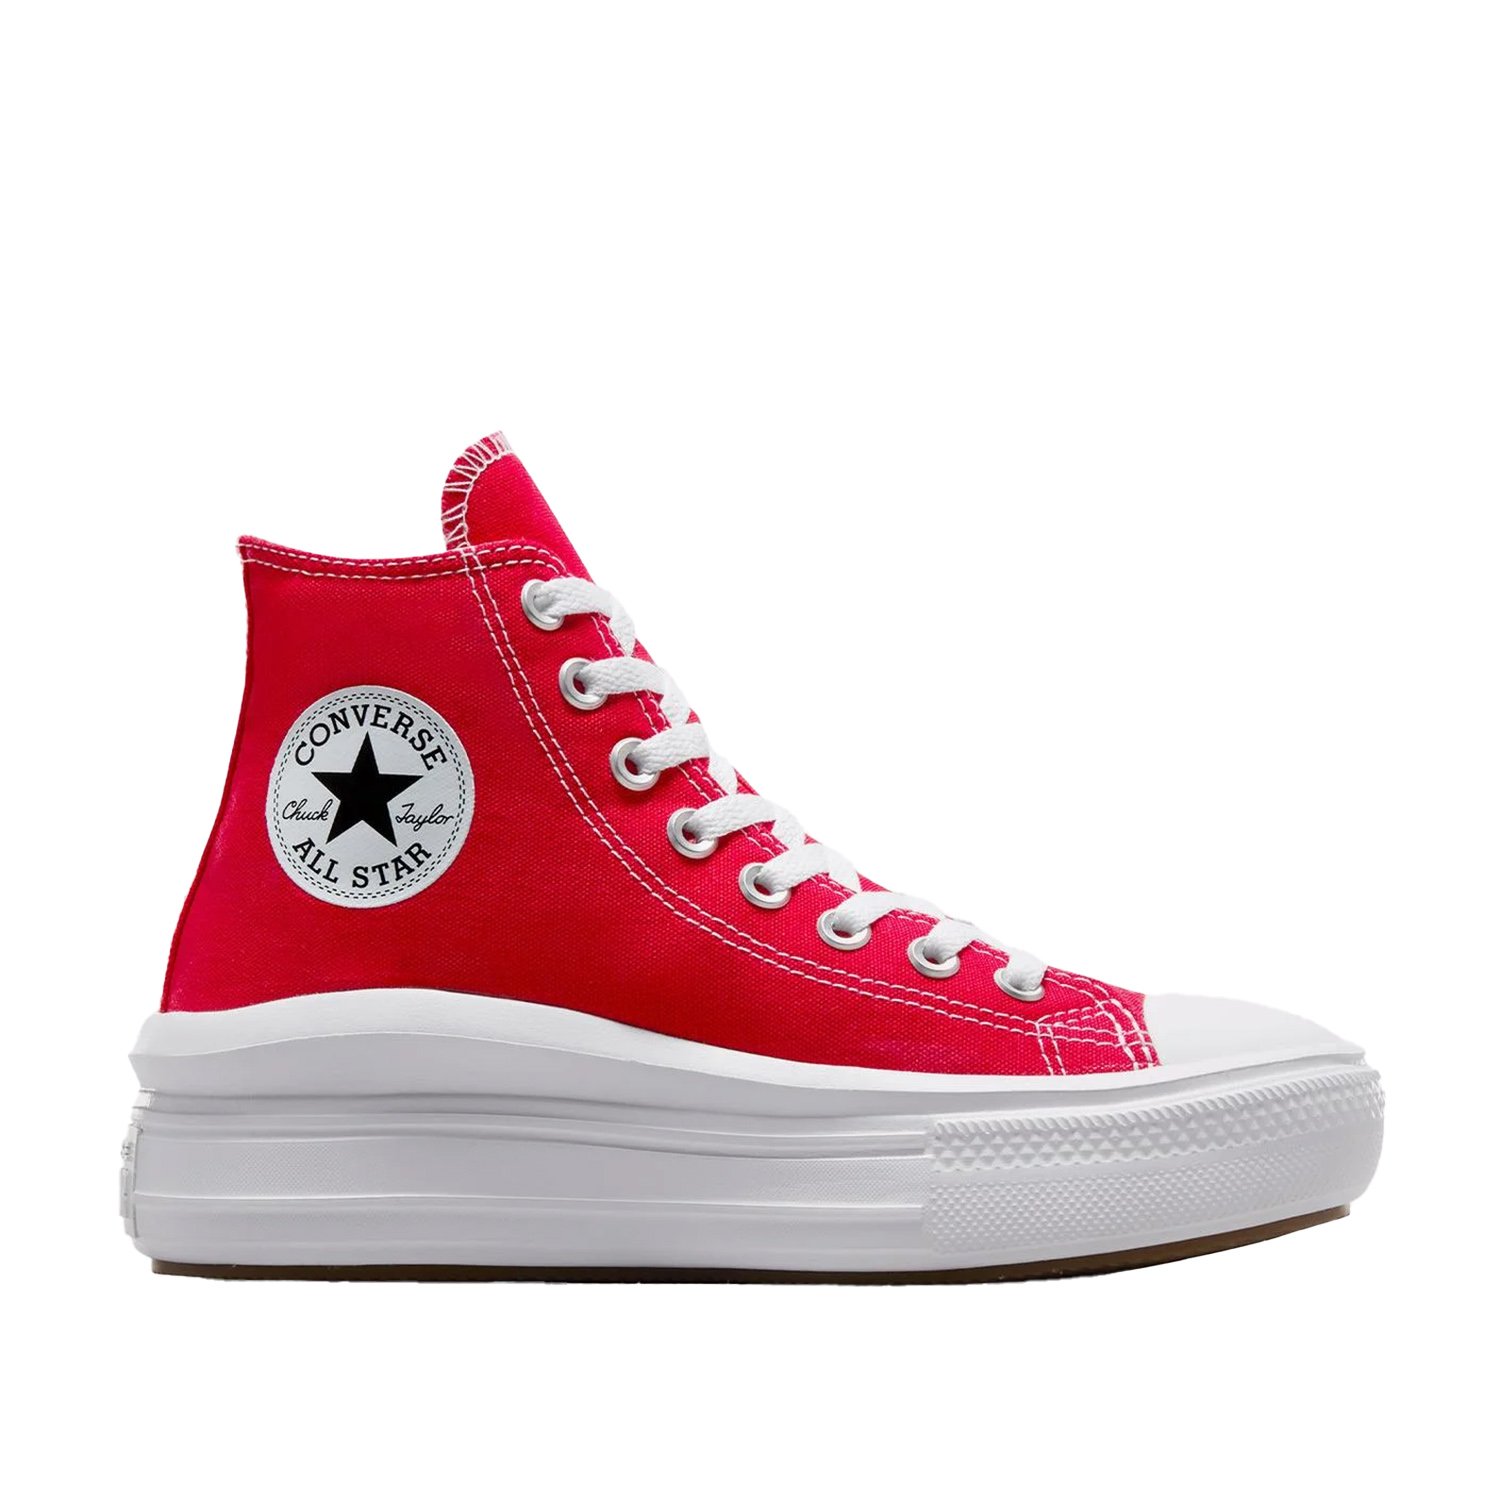 Converse Chuck Taylor All Star Move Kadın Ayakkabı - Kırmızı - 1